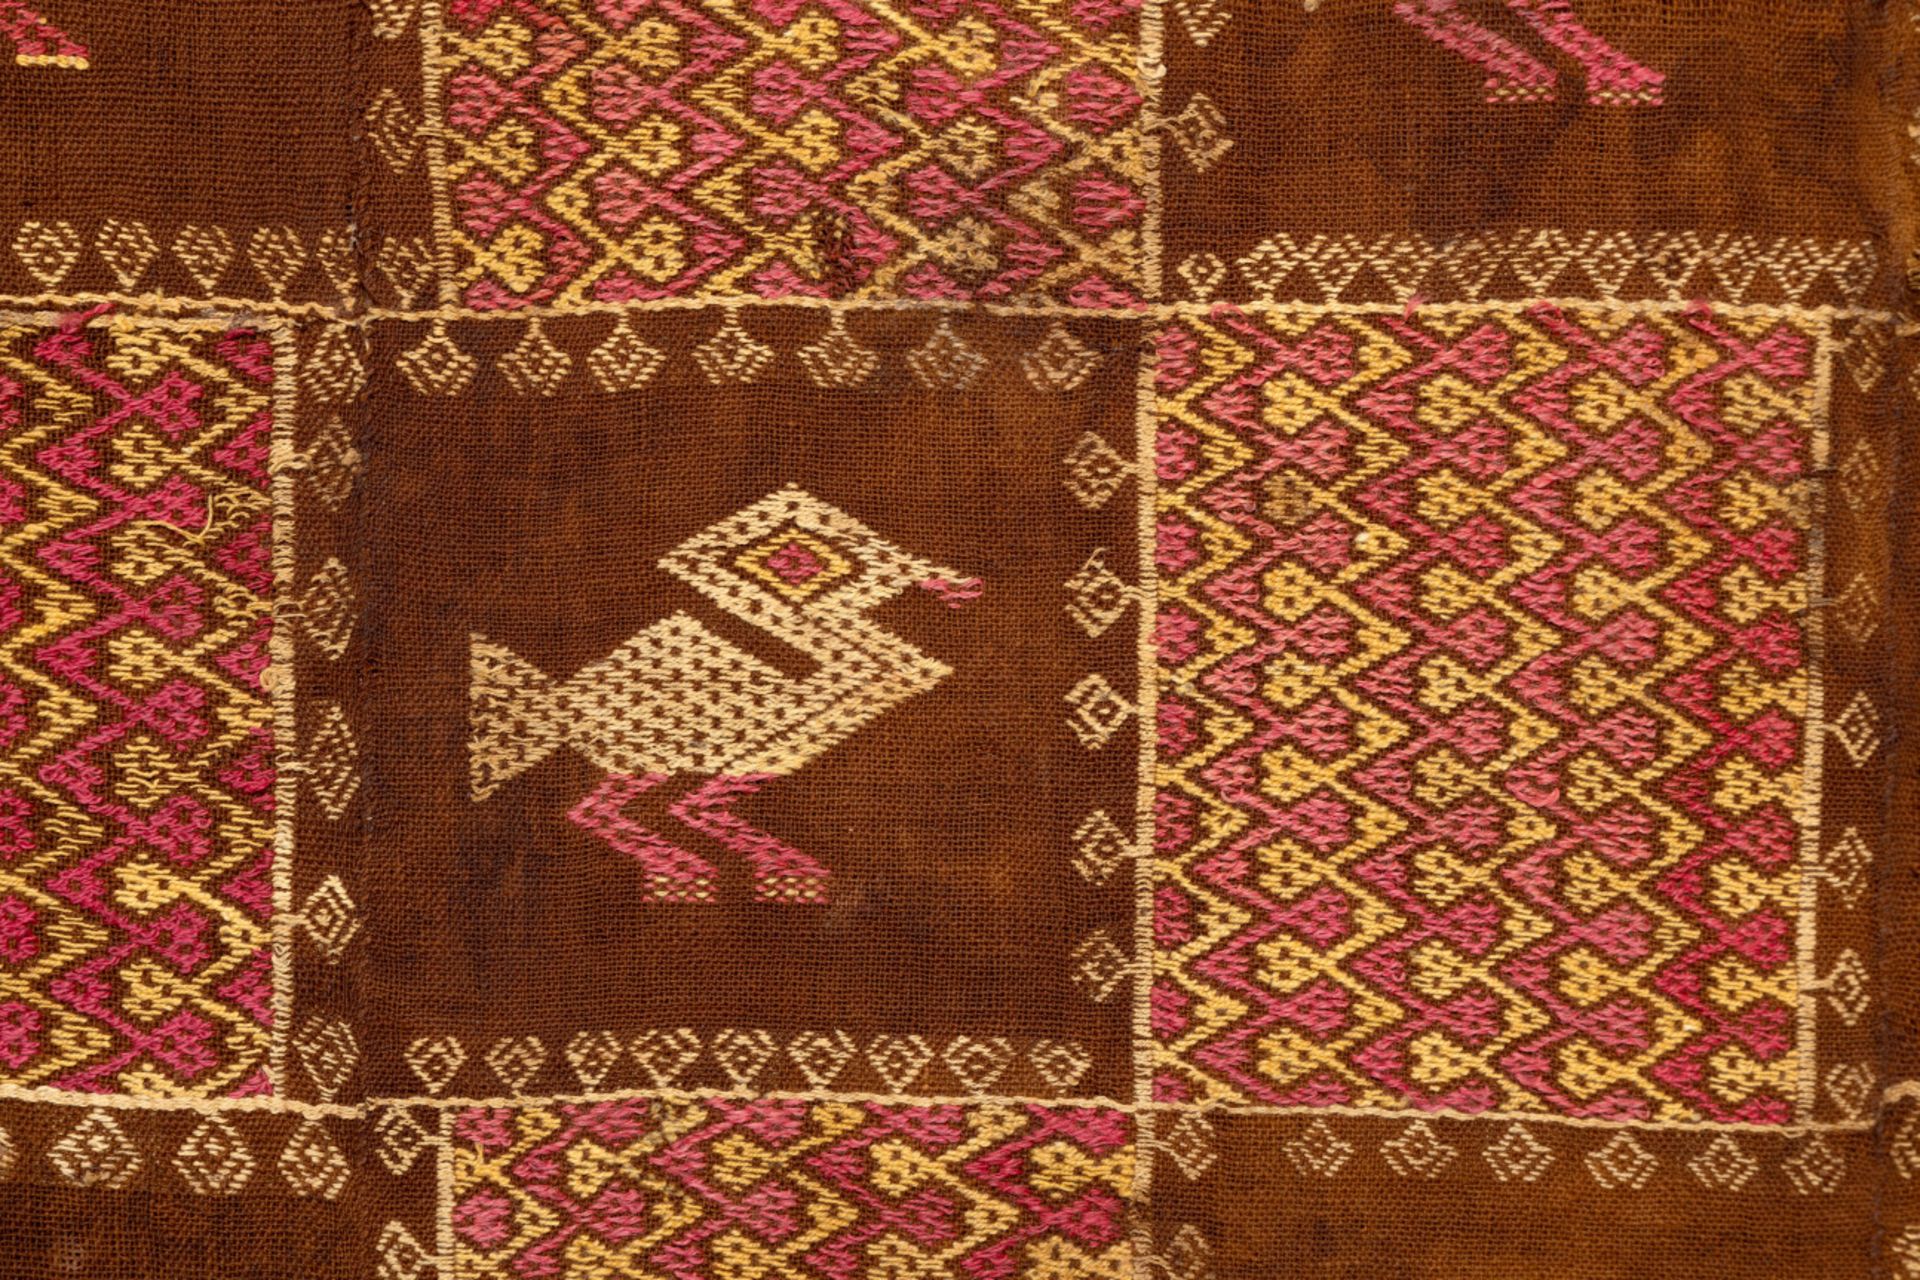 Peru, Chancay, large textile panel, ca. 1200-1470, - Image 2 of 2